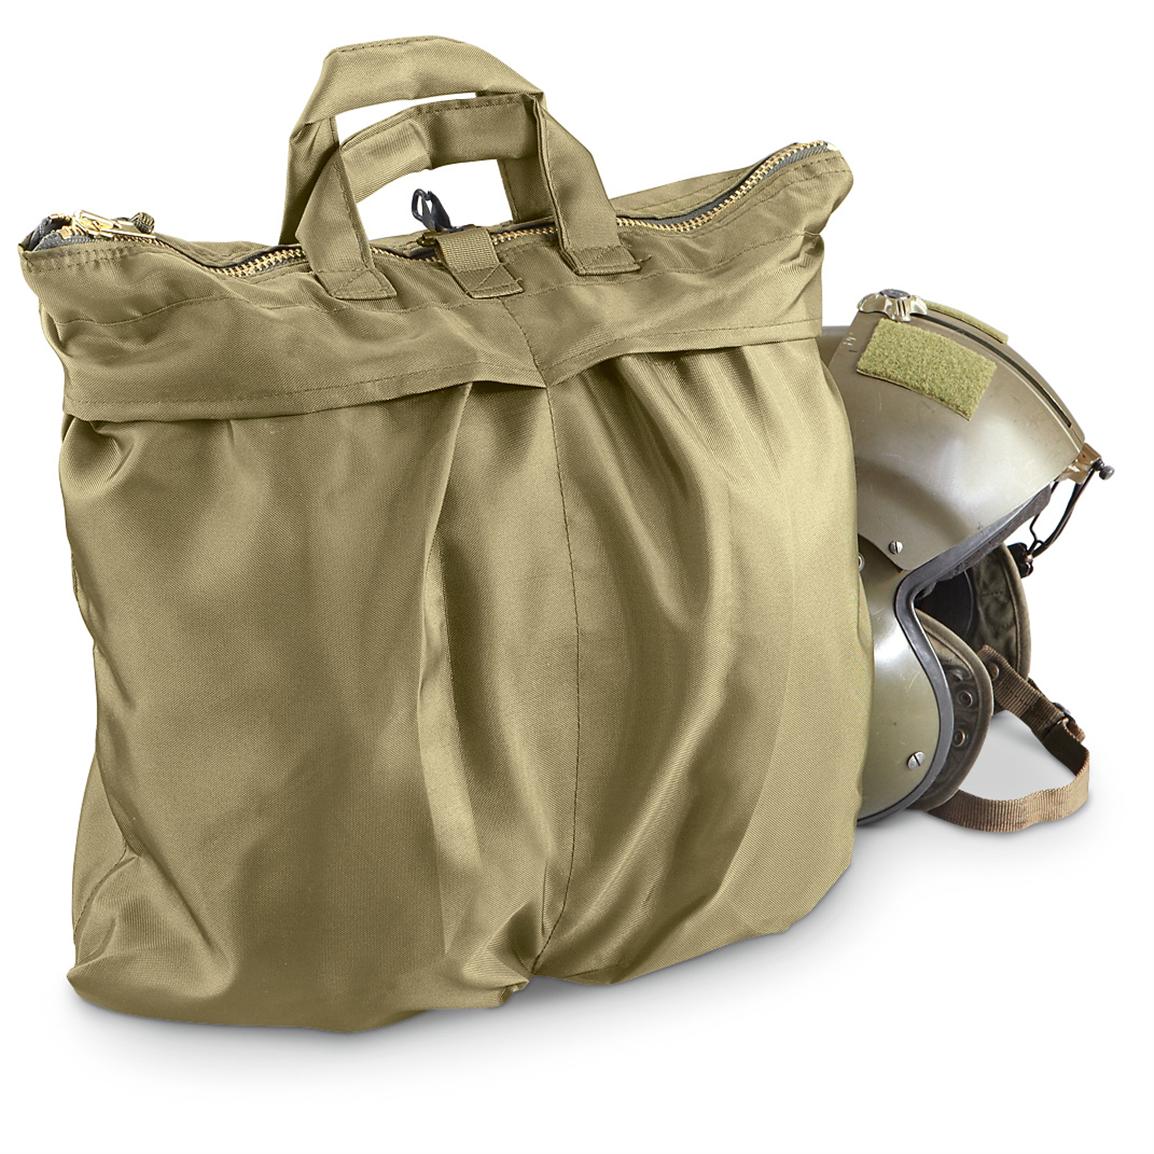 U.S. Military-style Helmet Bag, Olive Drab - 215543, Military 